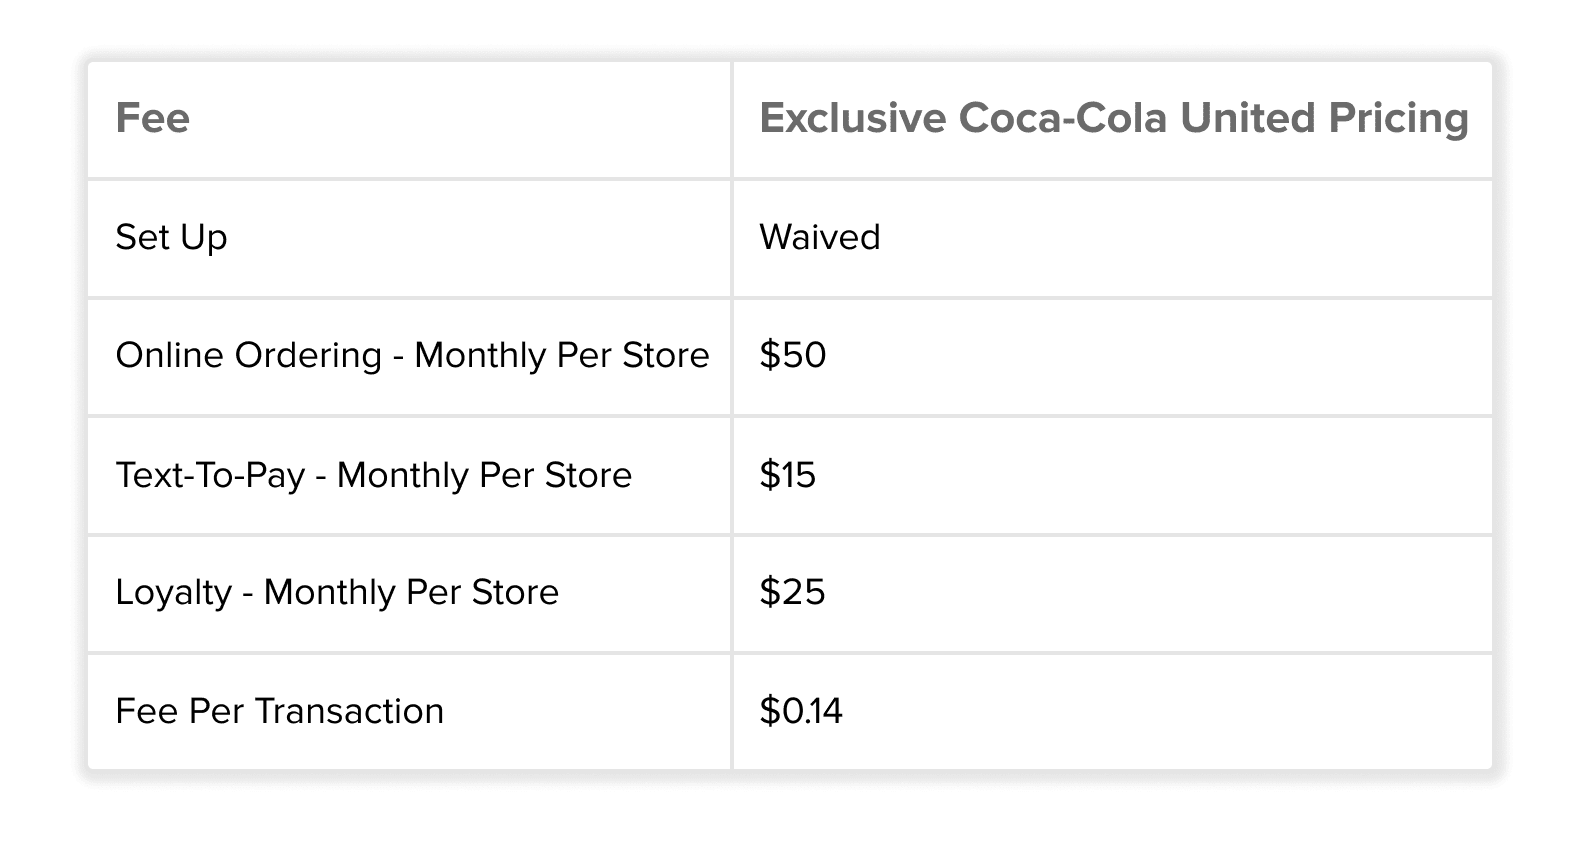 CardFree Coca-Cola pricing